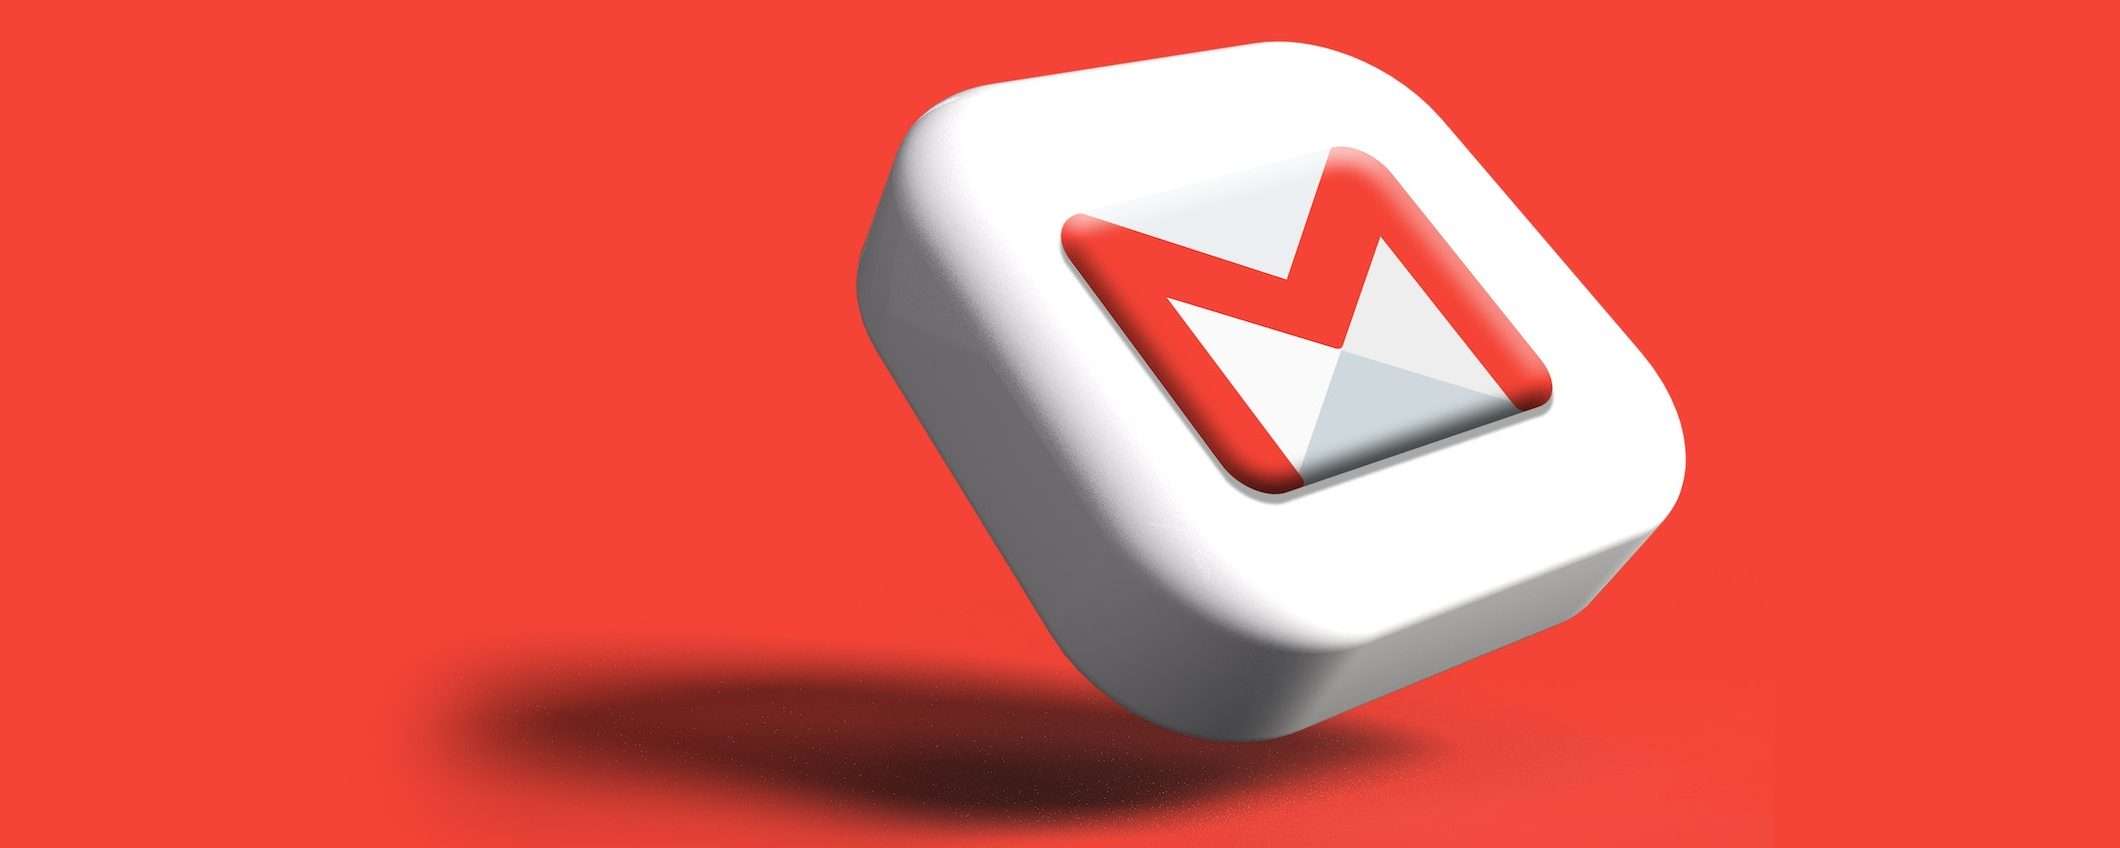 Gmail: nuova interfaccia in dirittura d'arrivo